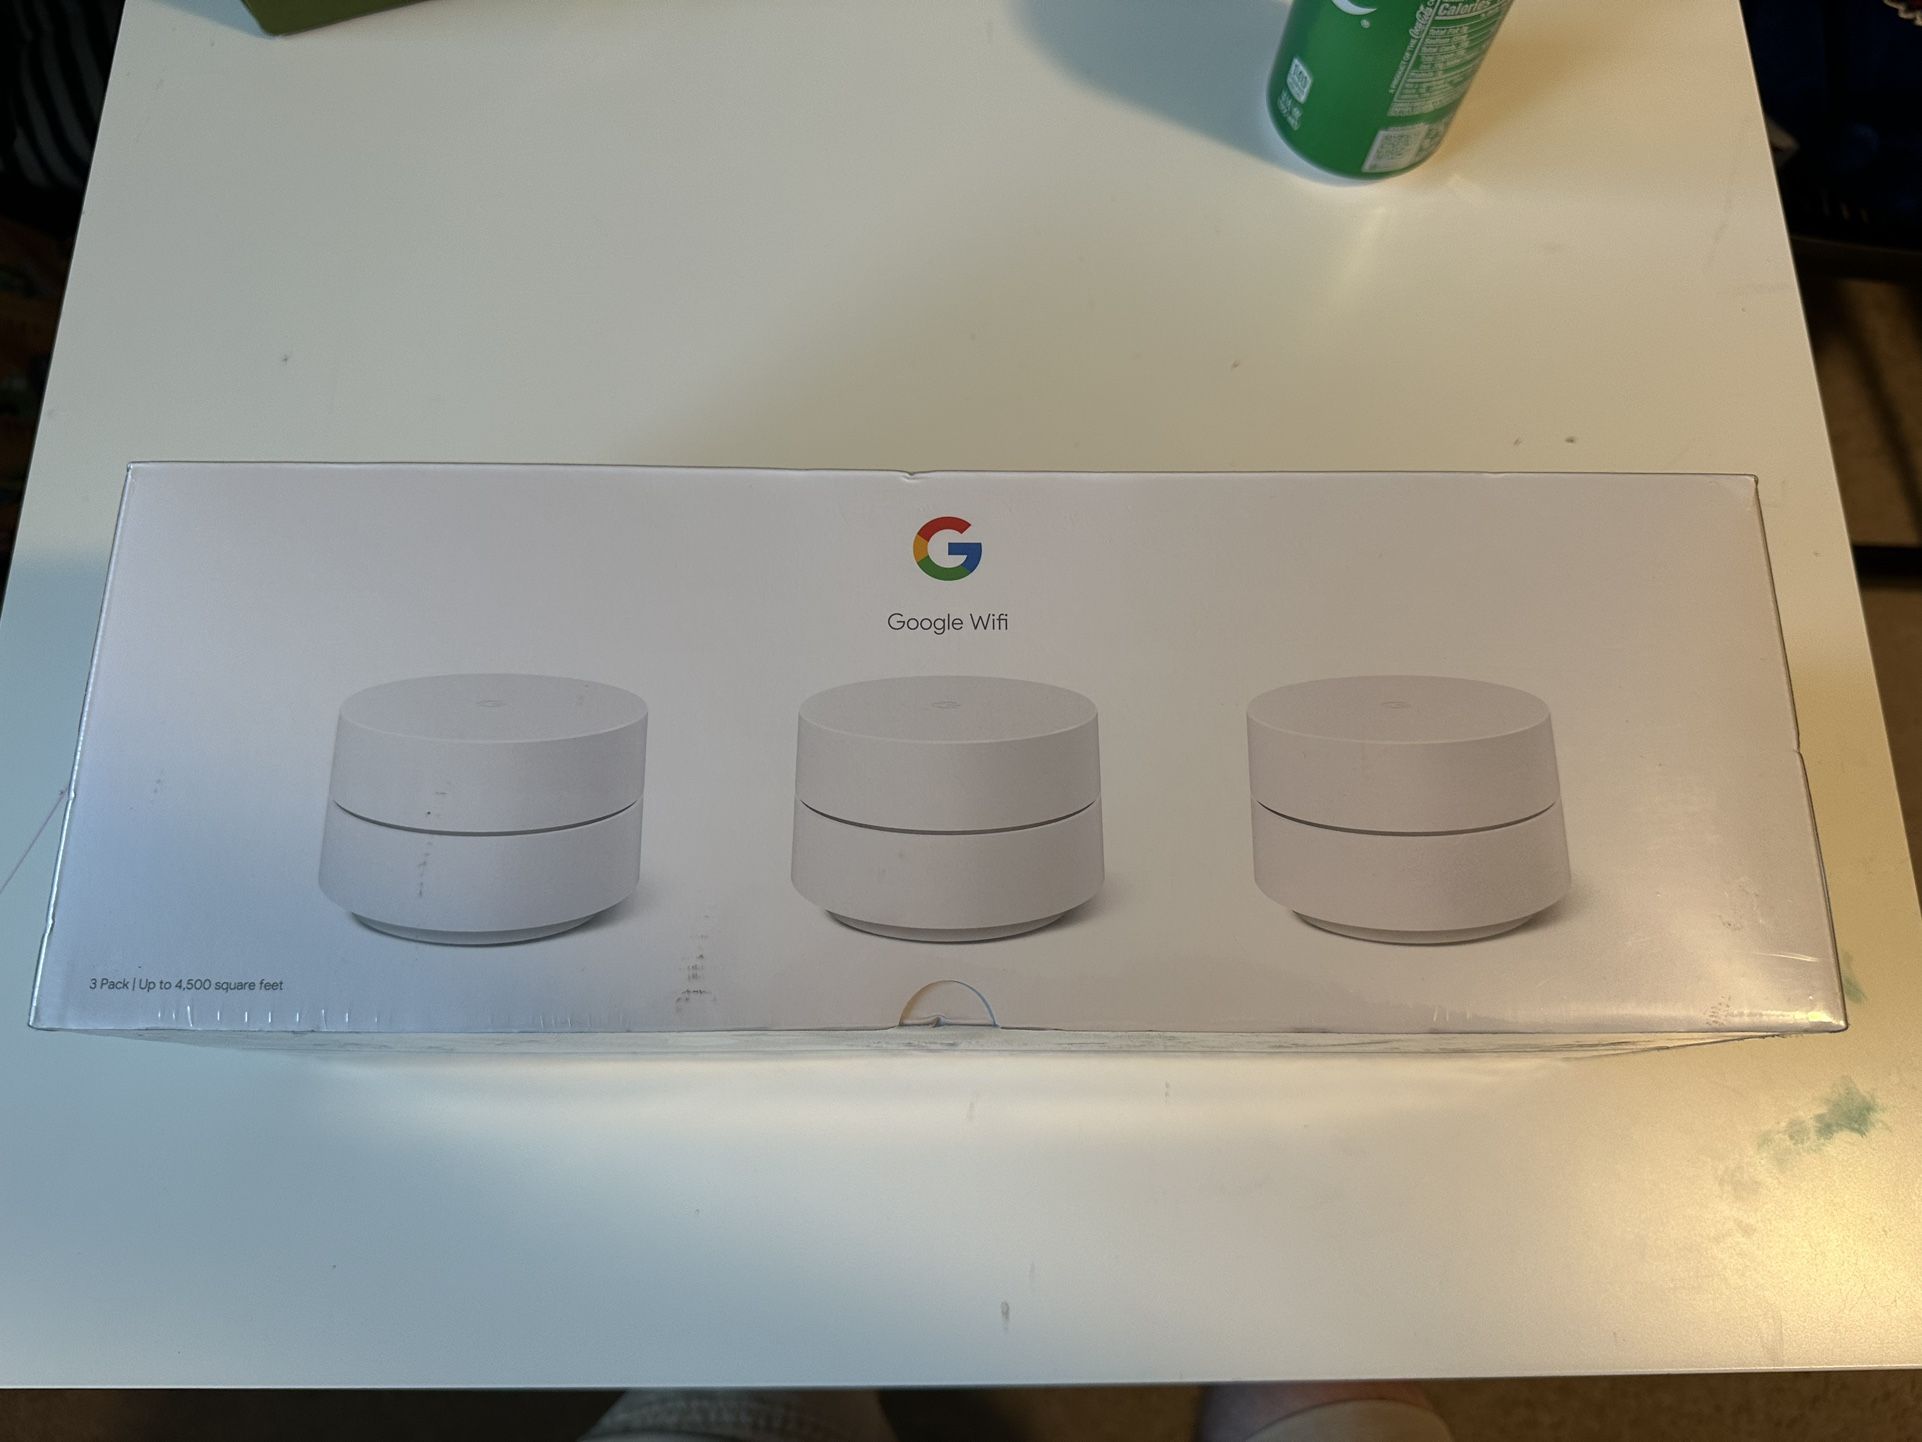 Google WiFi 3 pack